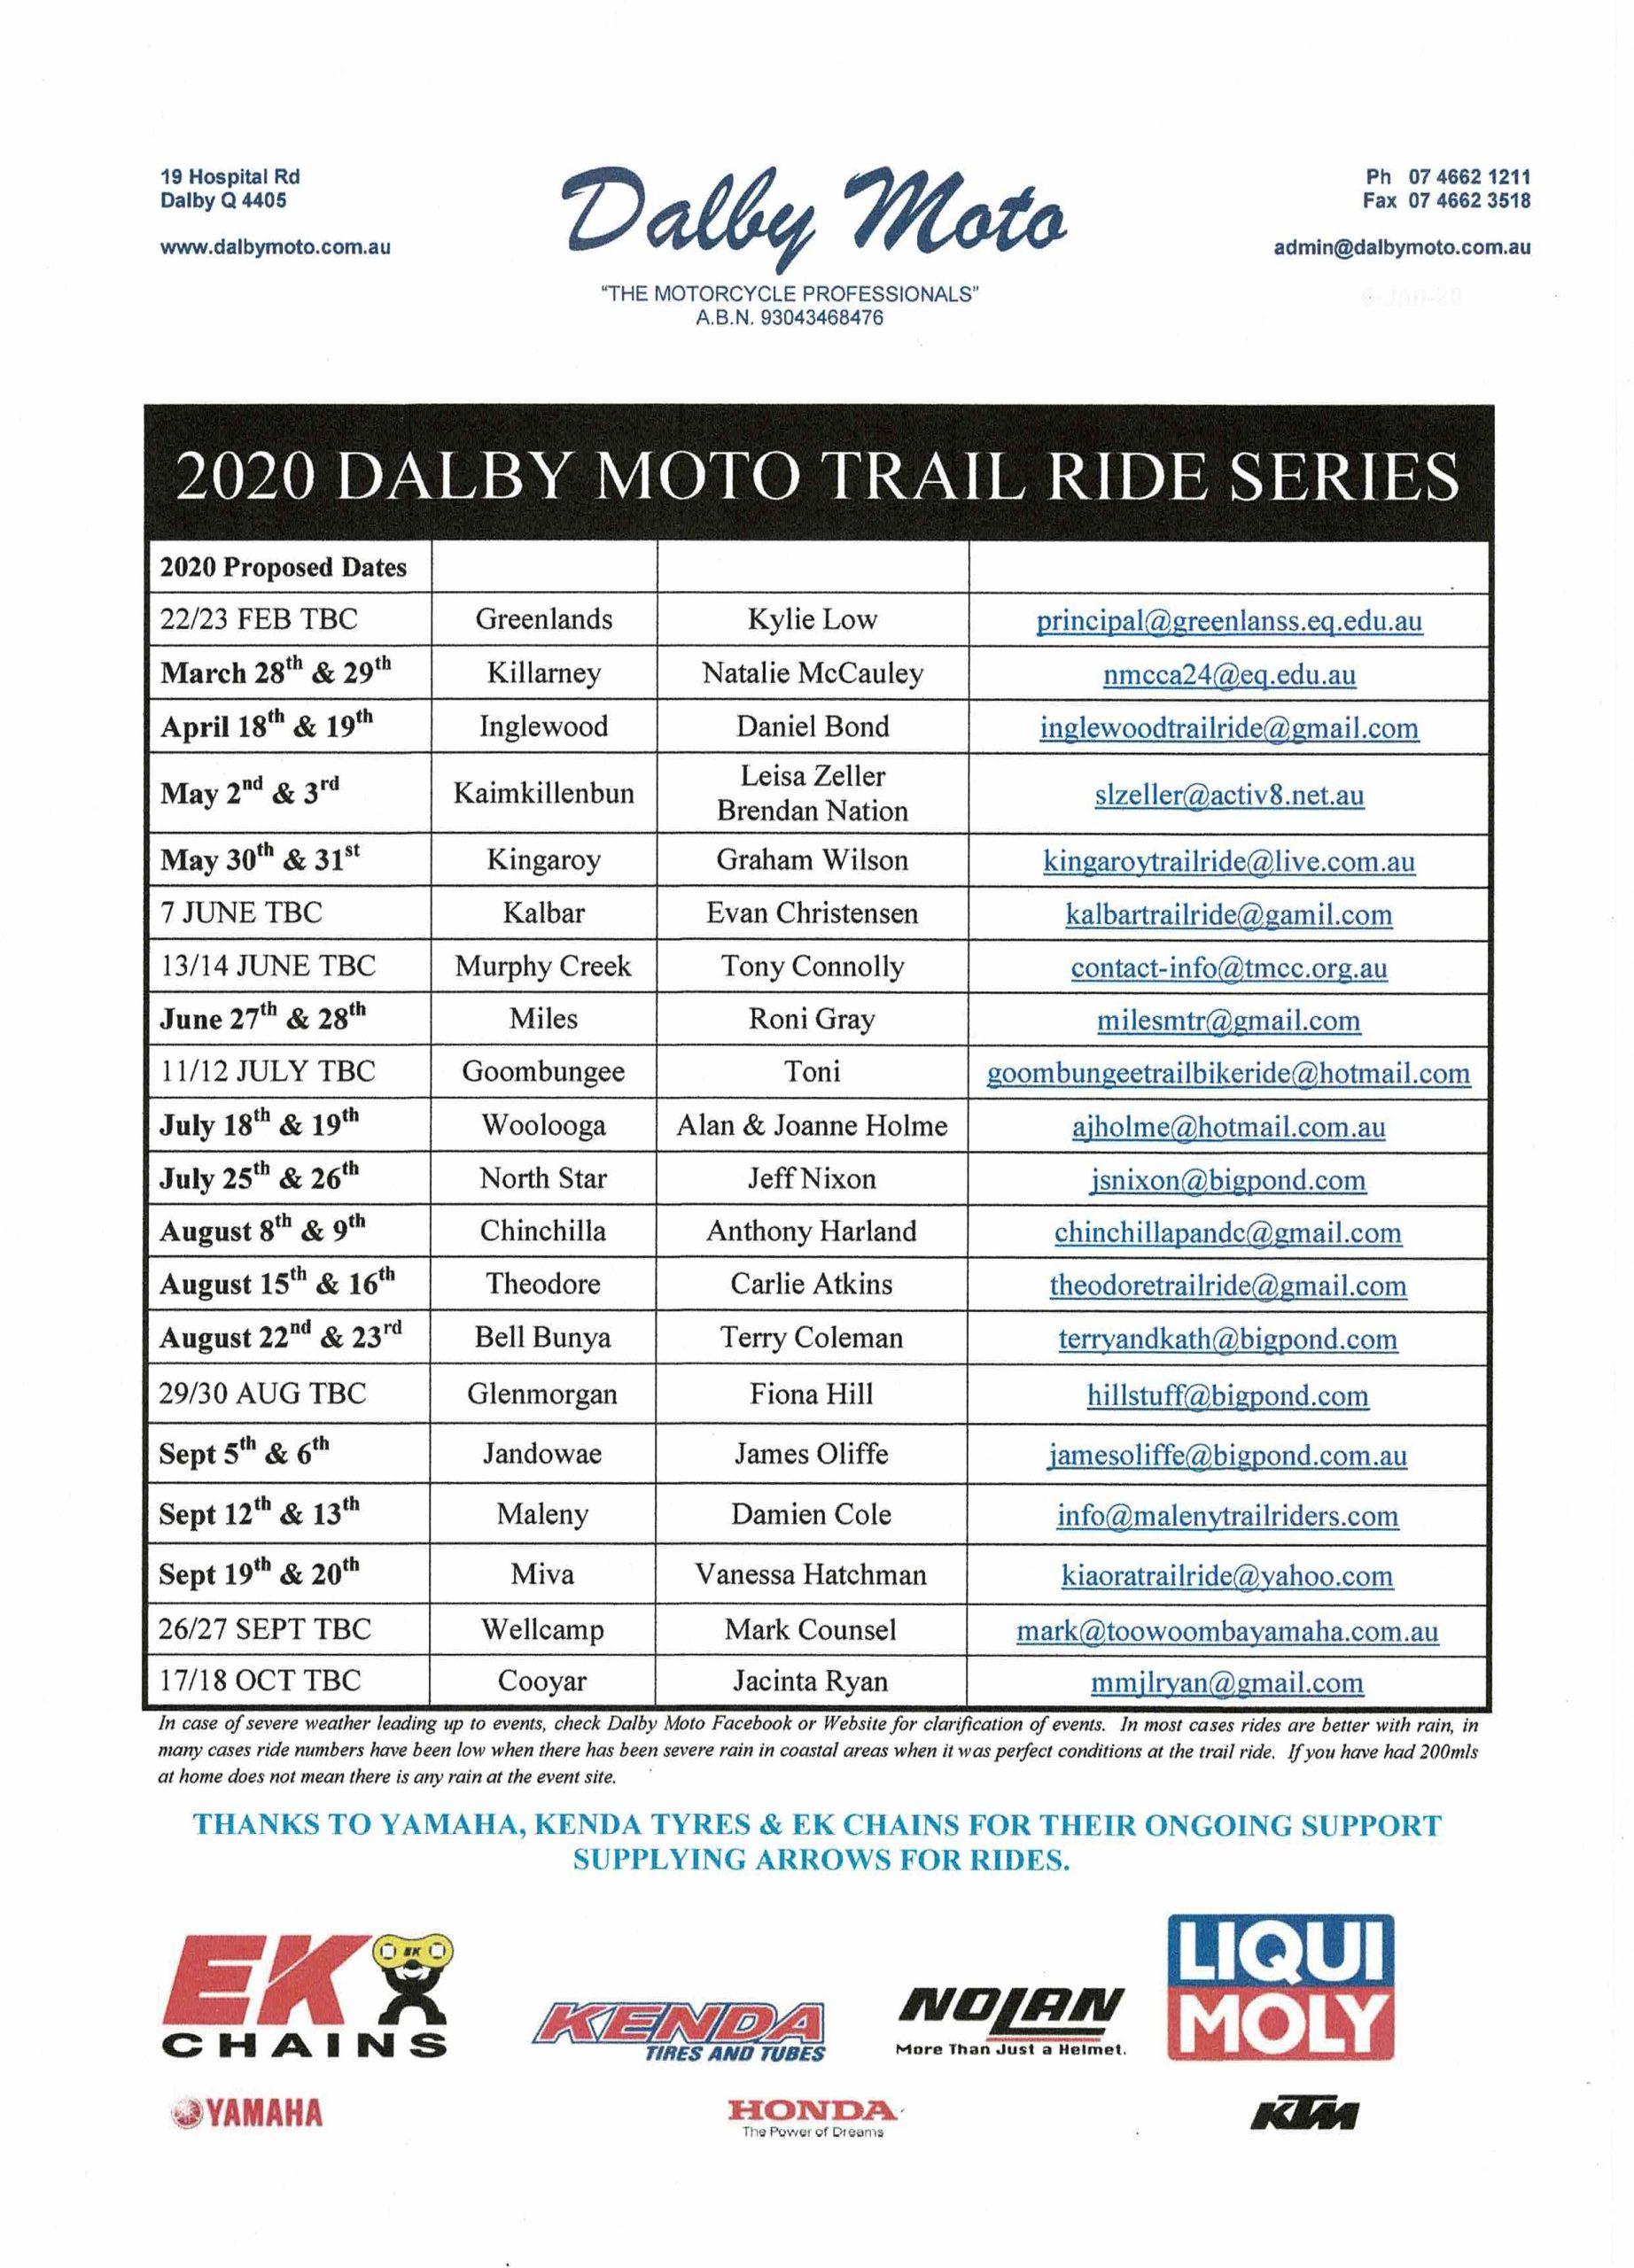 Dalby Moto Trail Ride Series